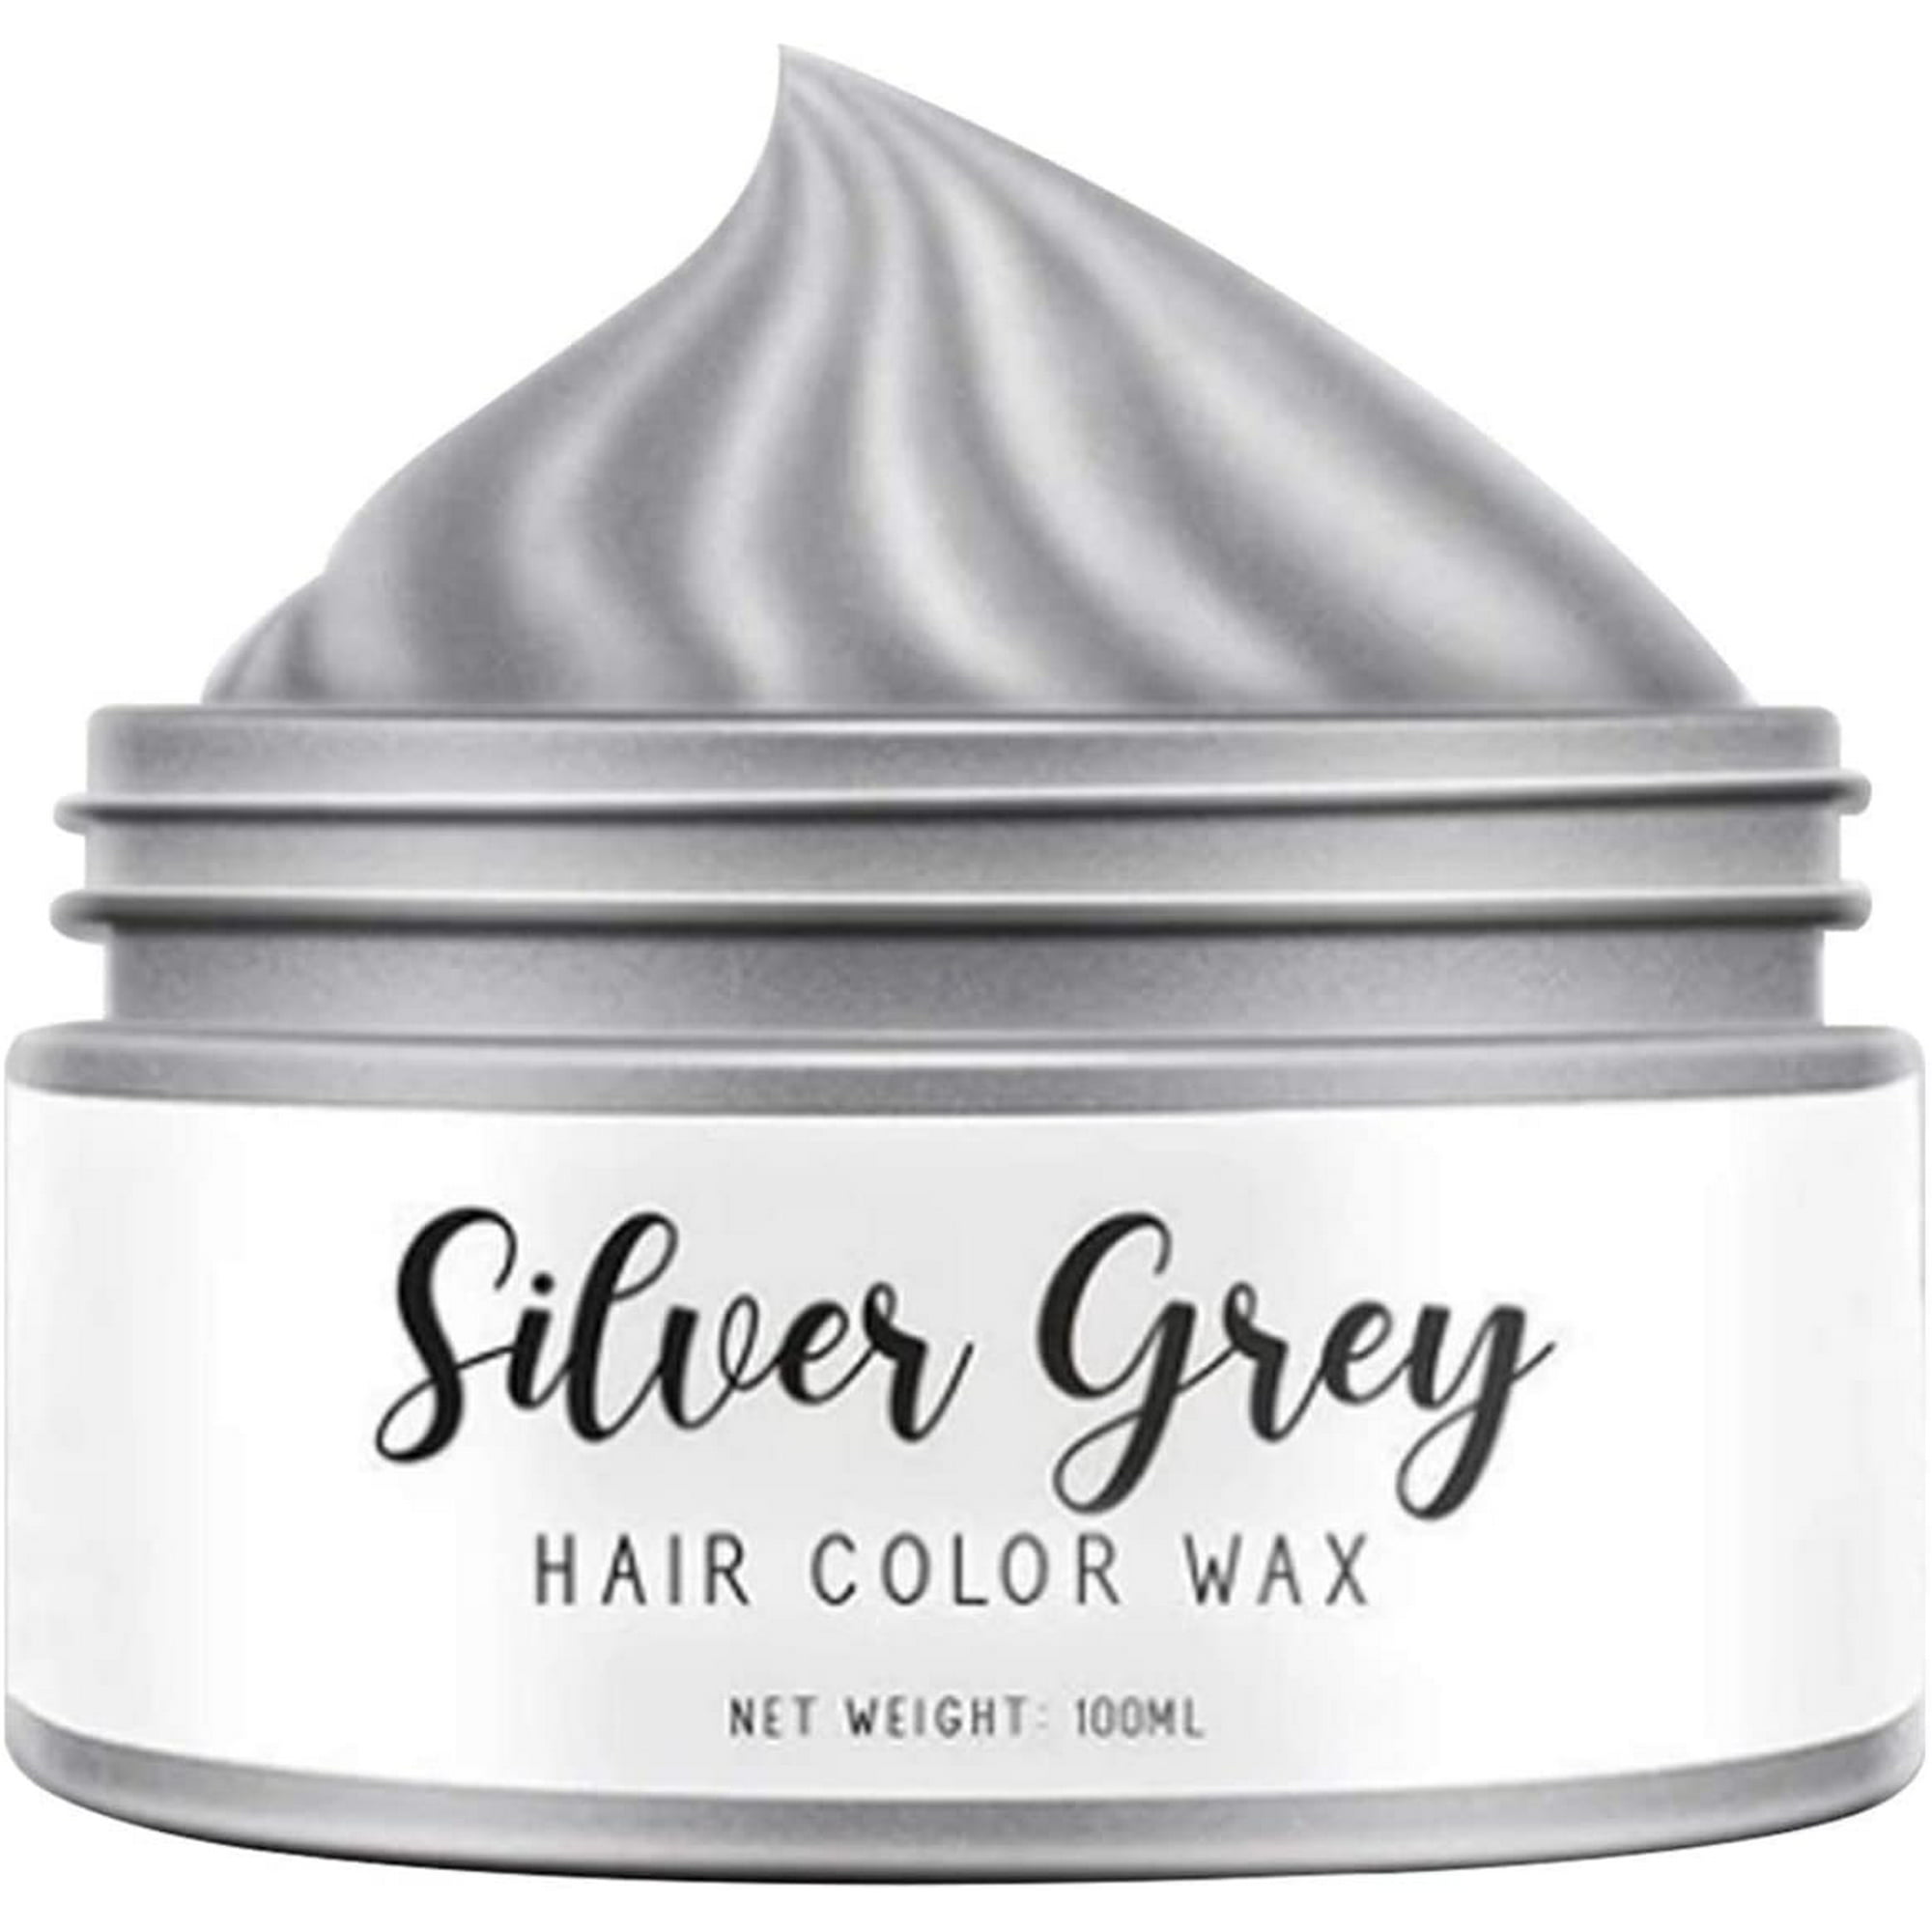 Silver Grey Hair Color Wax, Temporary Colors Hair Dye Beauty Care Hair  Styling Wax 1/ Oz, Coloring Mud Grey Hair Dye | Walmart Canada